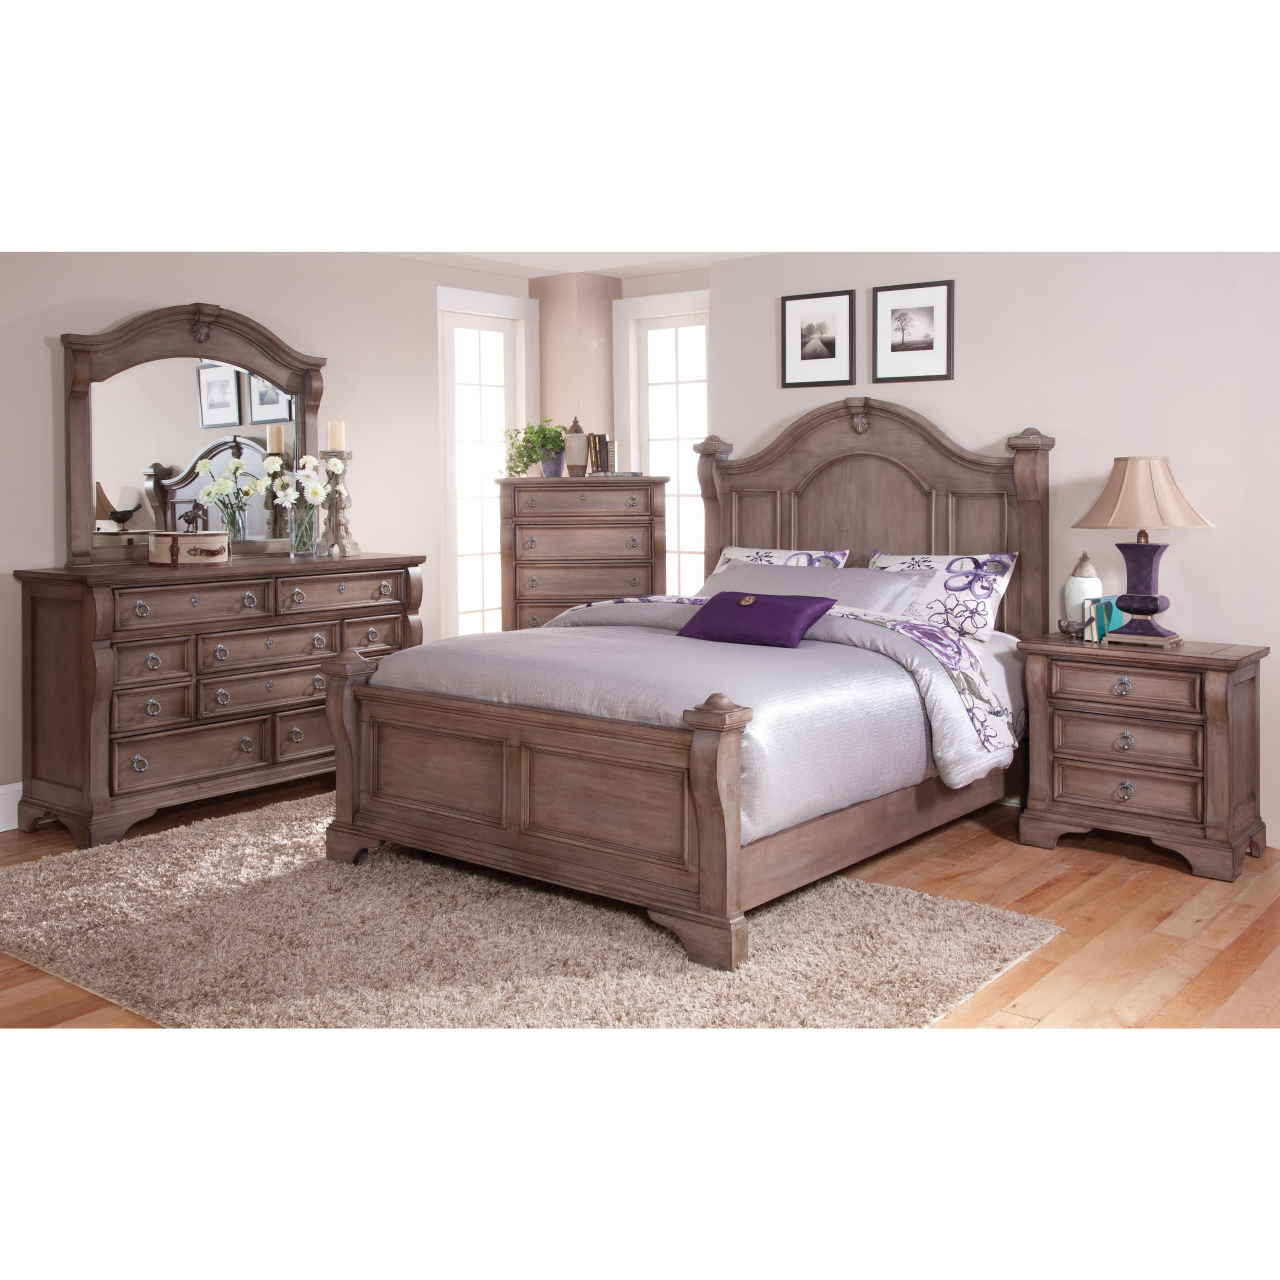 Marlo Furniture Queen Bedroom Sets Bedroom Furniture Rockville Md within measurements 1280 X 1280